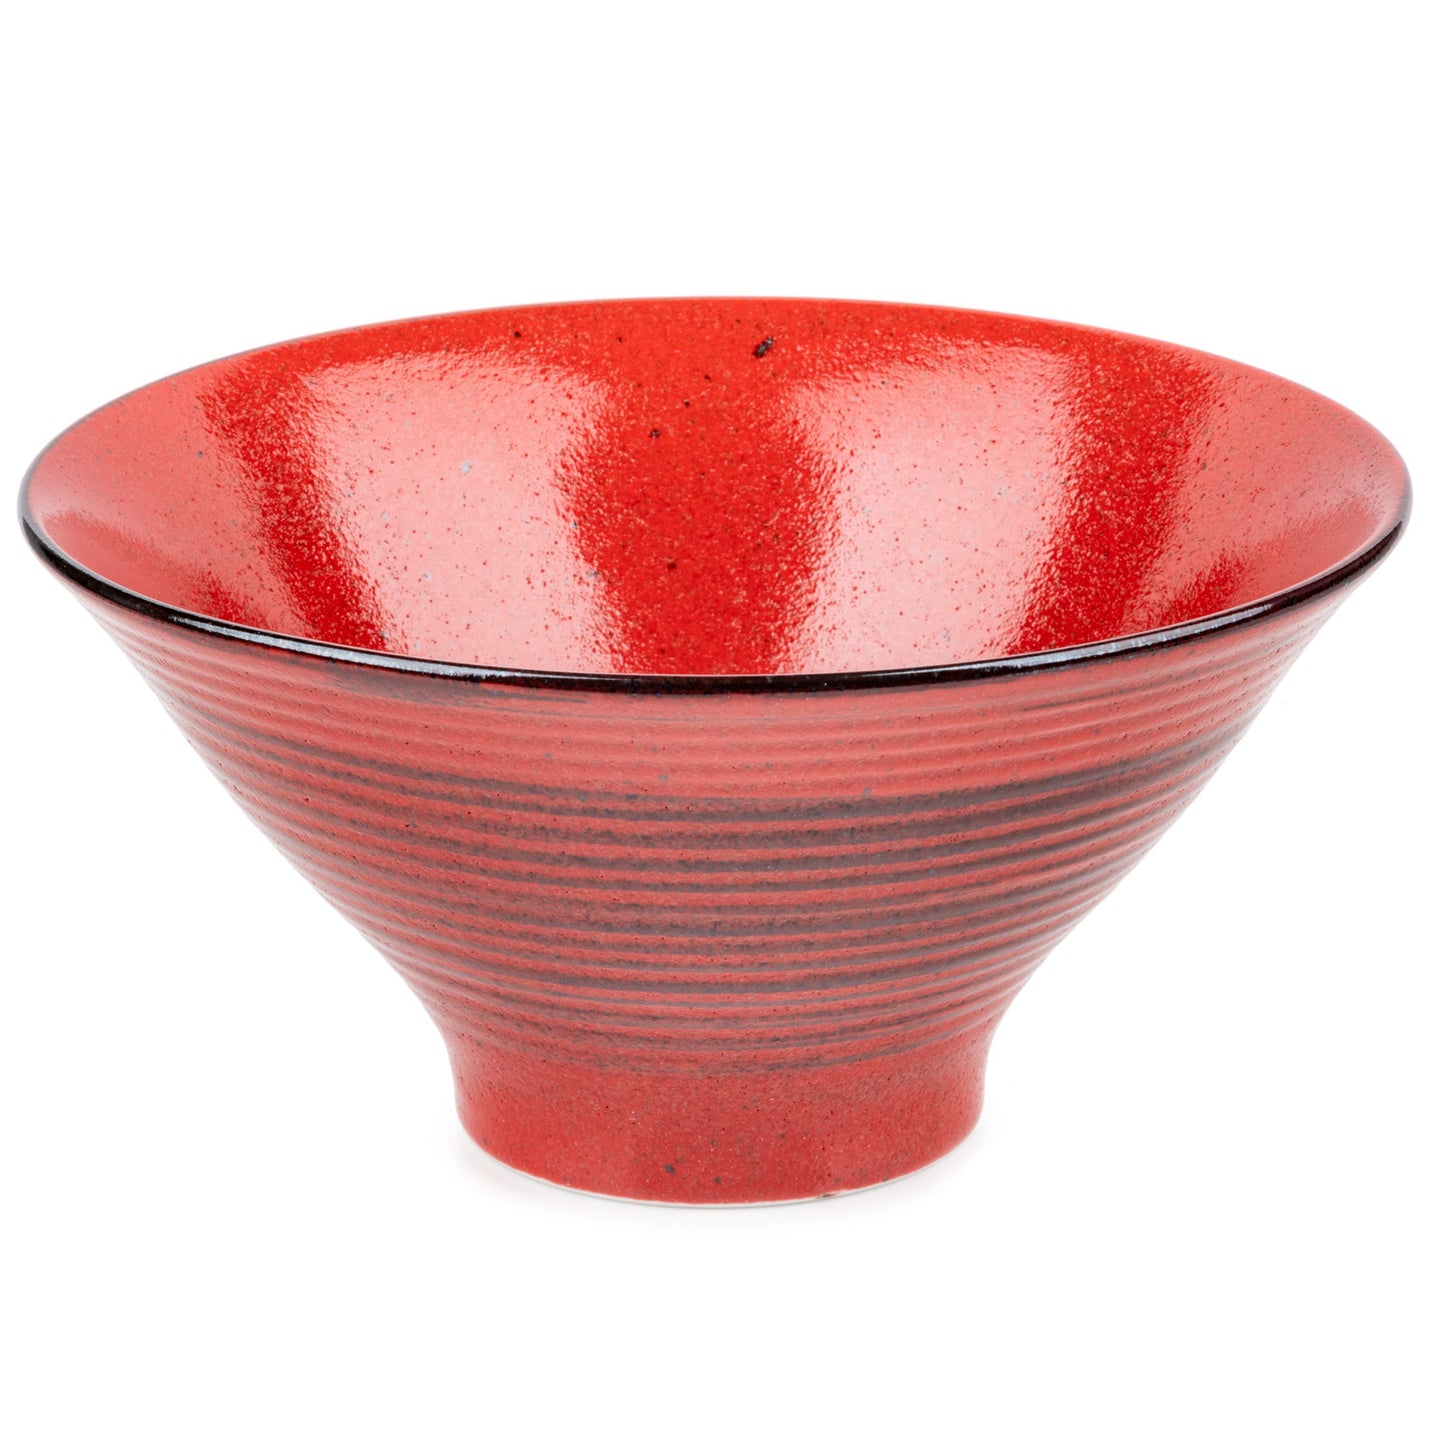 Momiji Premium Japanese Ramen Bowl